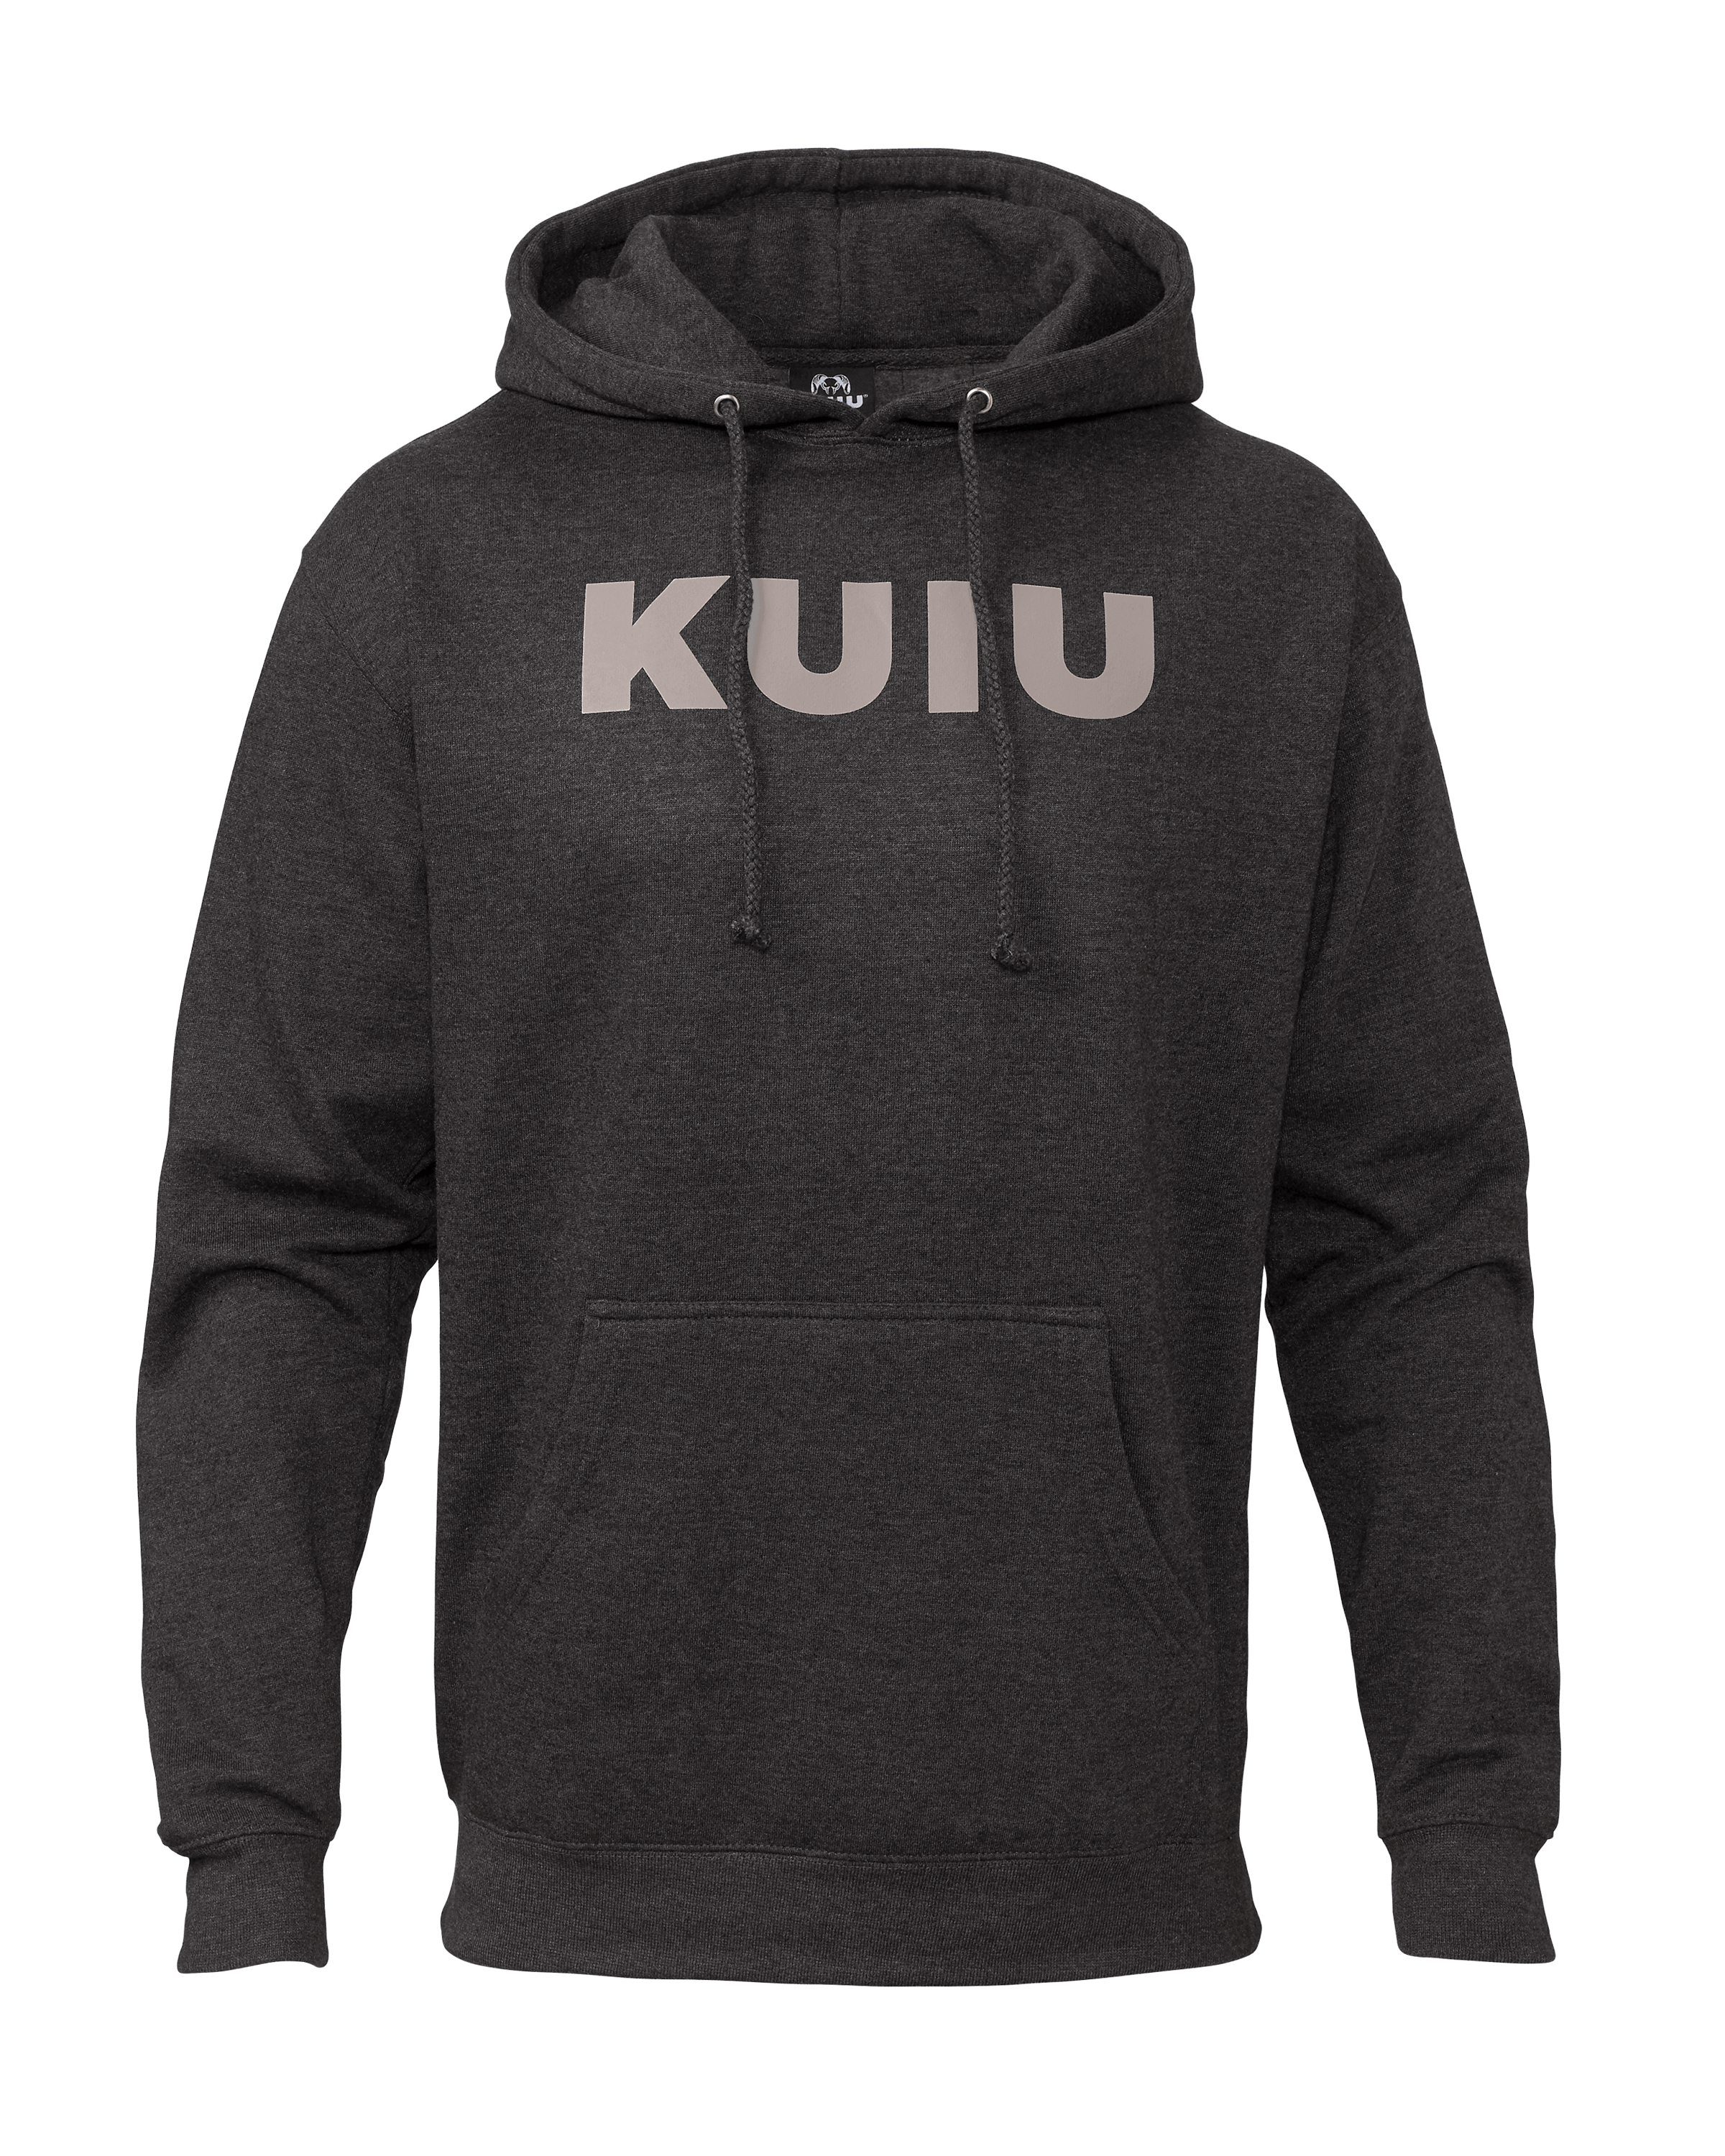 KUIU Outlet Ultralight Sleeve Logo Hunting Hoodie in Charcoal | Size Medium